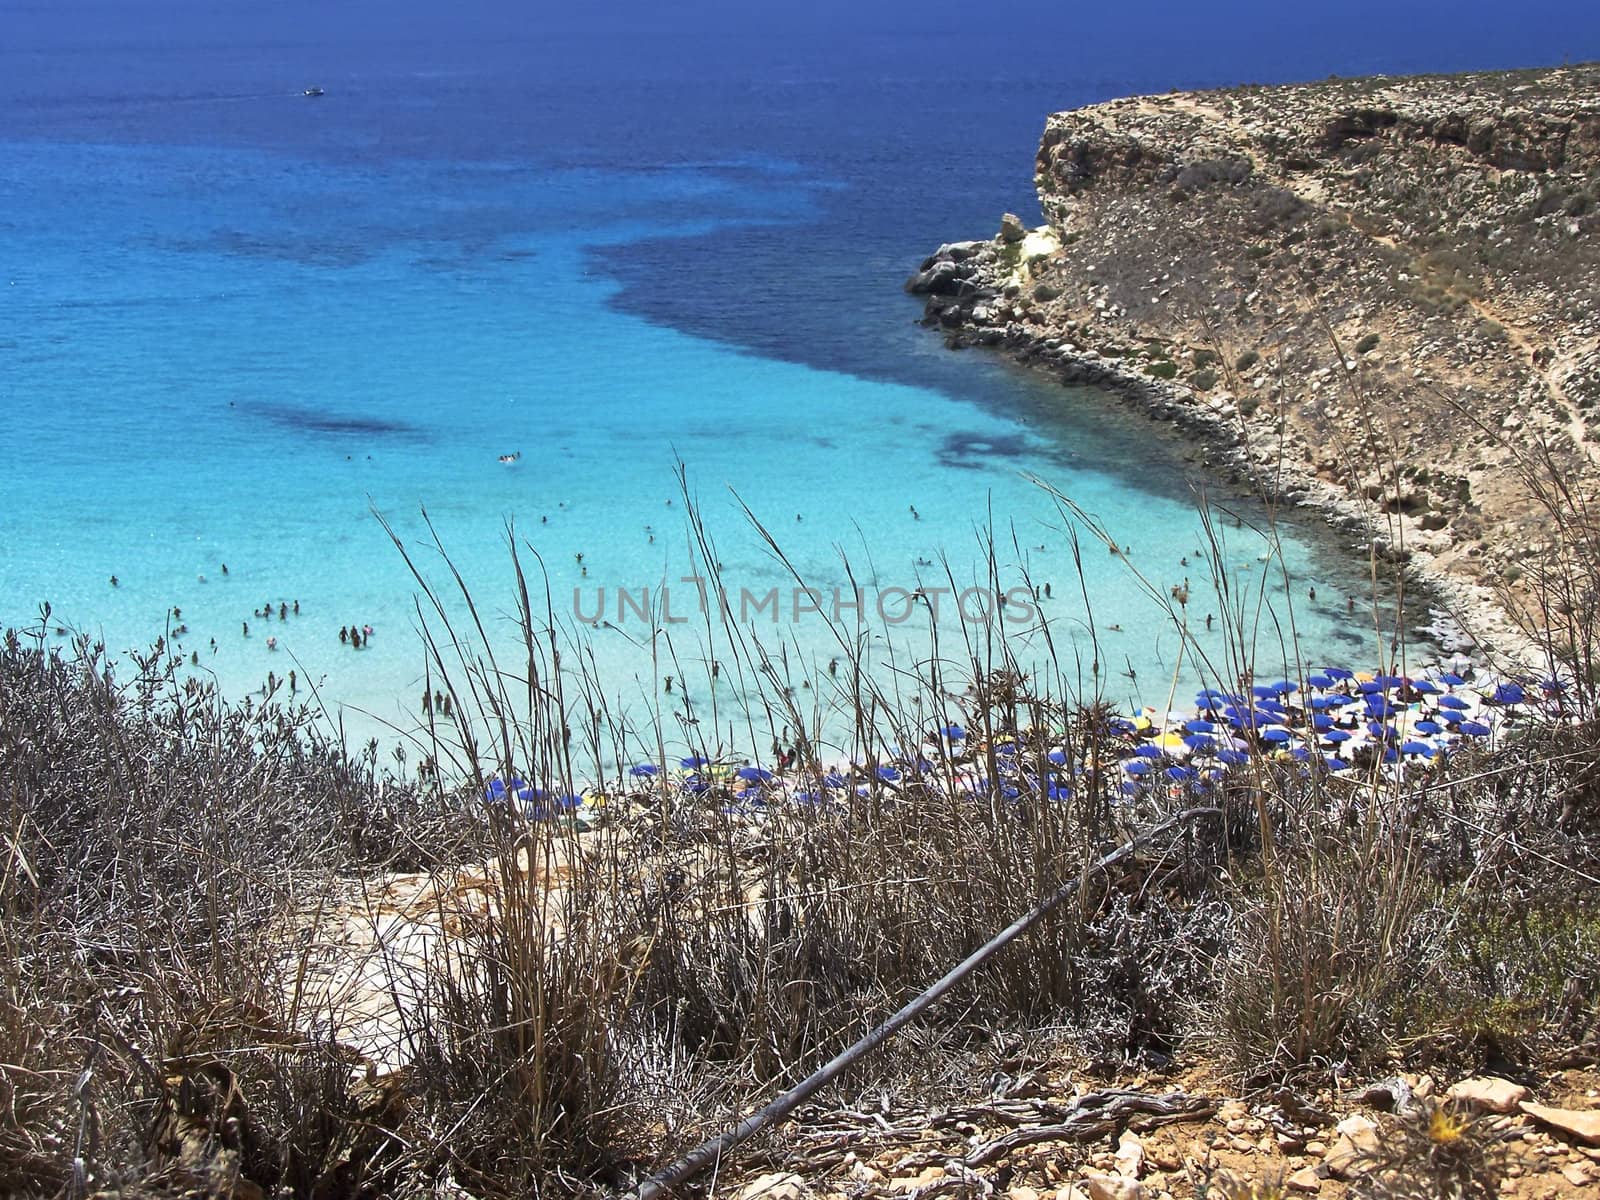 Island of rabbits, in Lampedusa - Sicily by gandolfocannatella